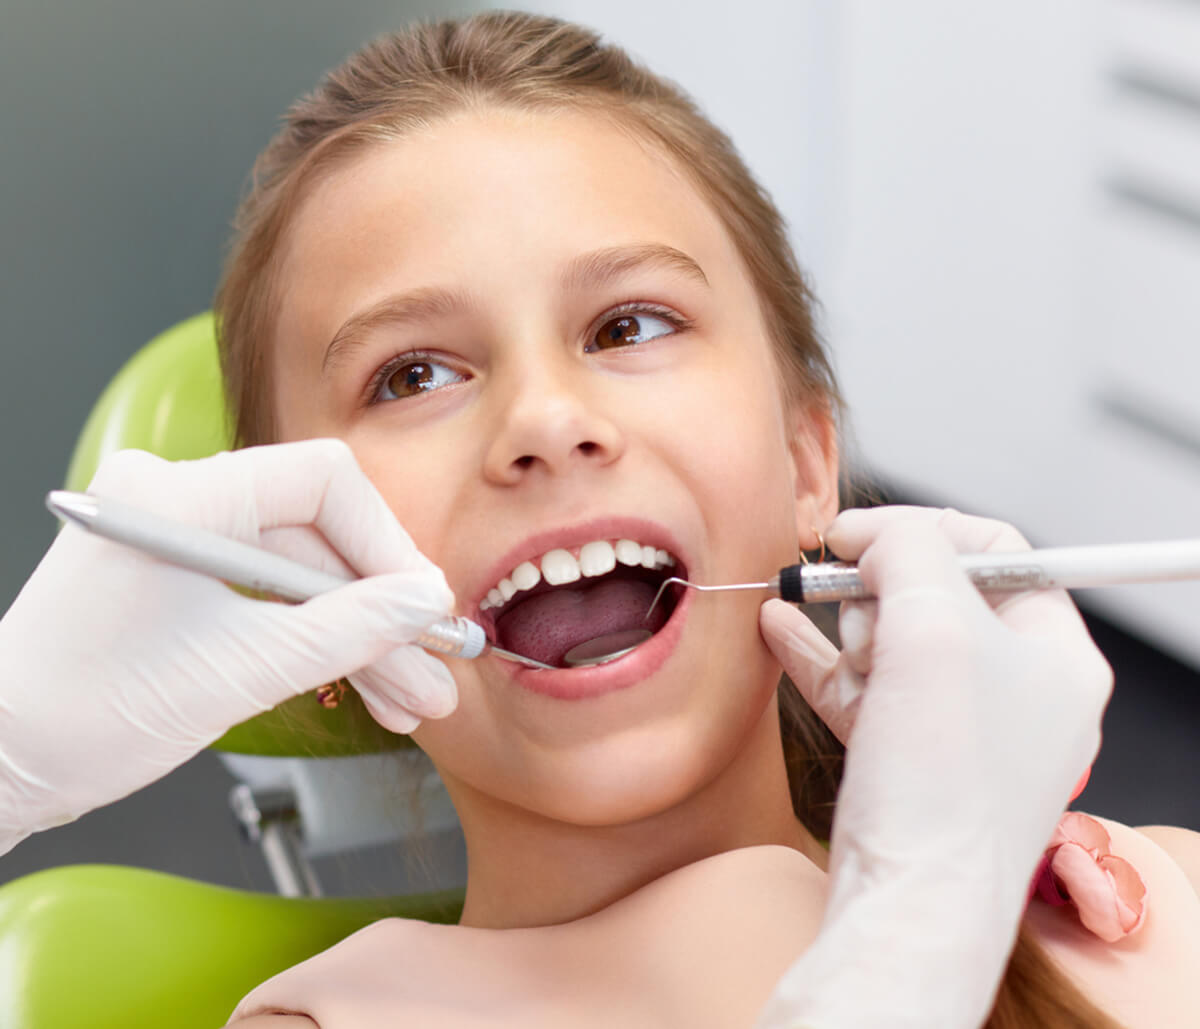 Tips for Finding the Best Houston Area Dentist for Kids